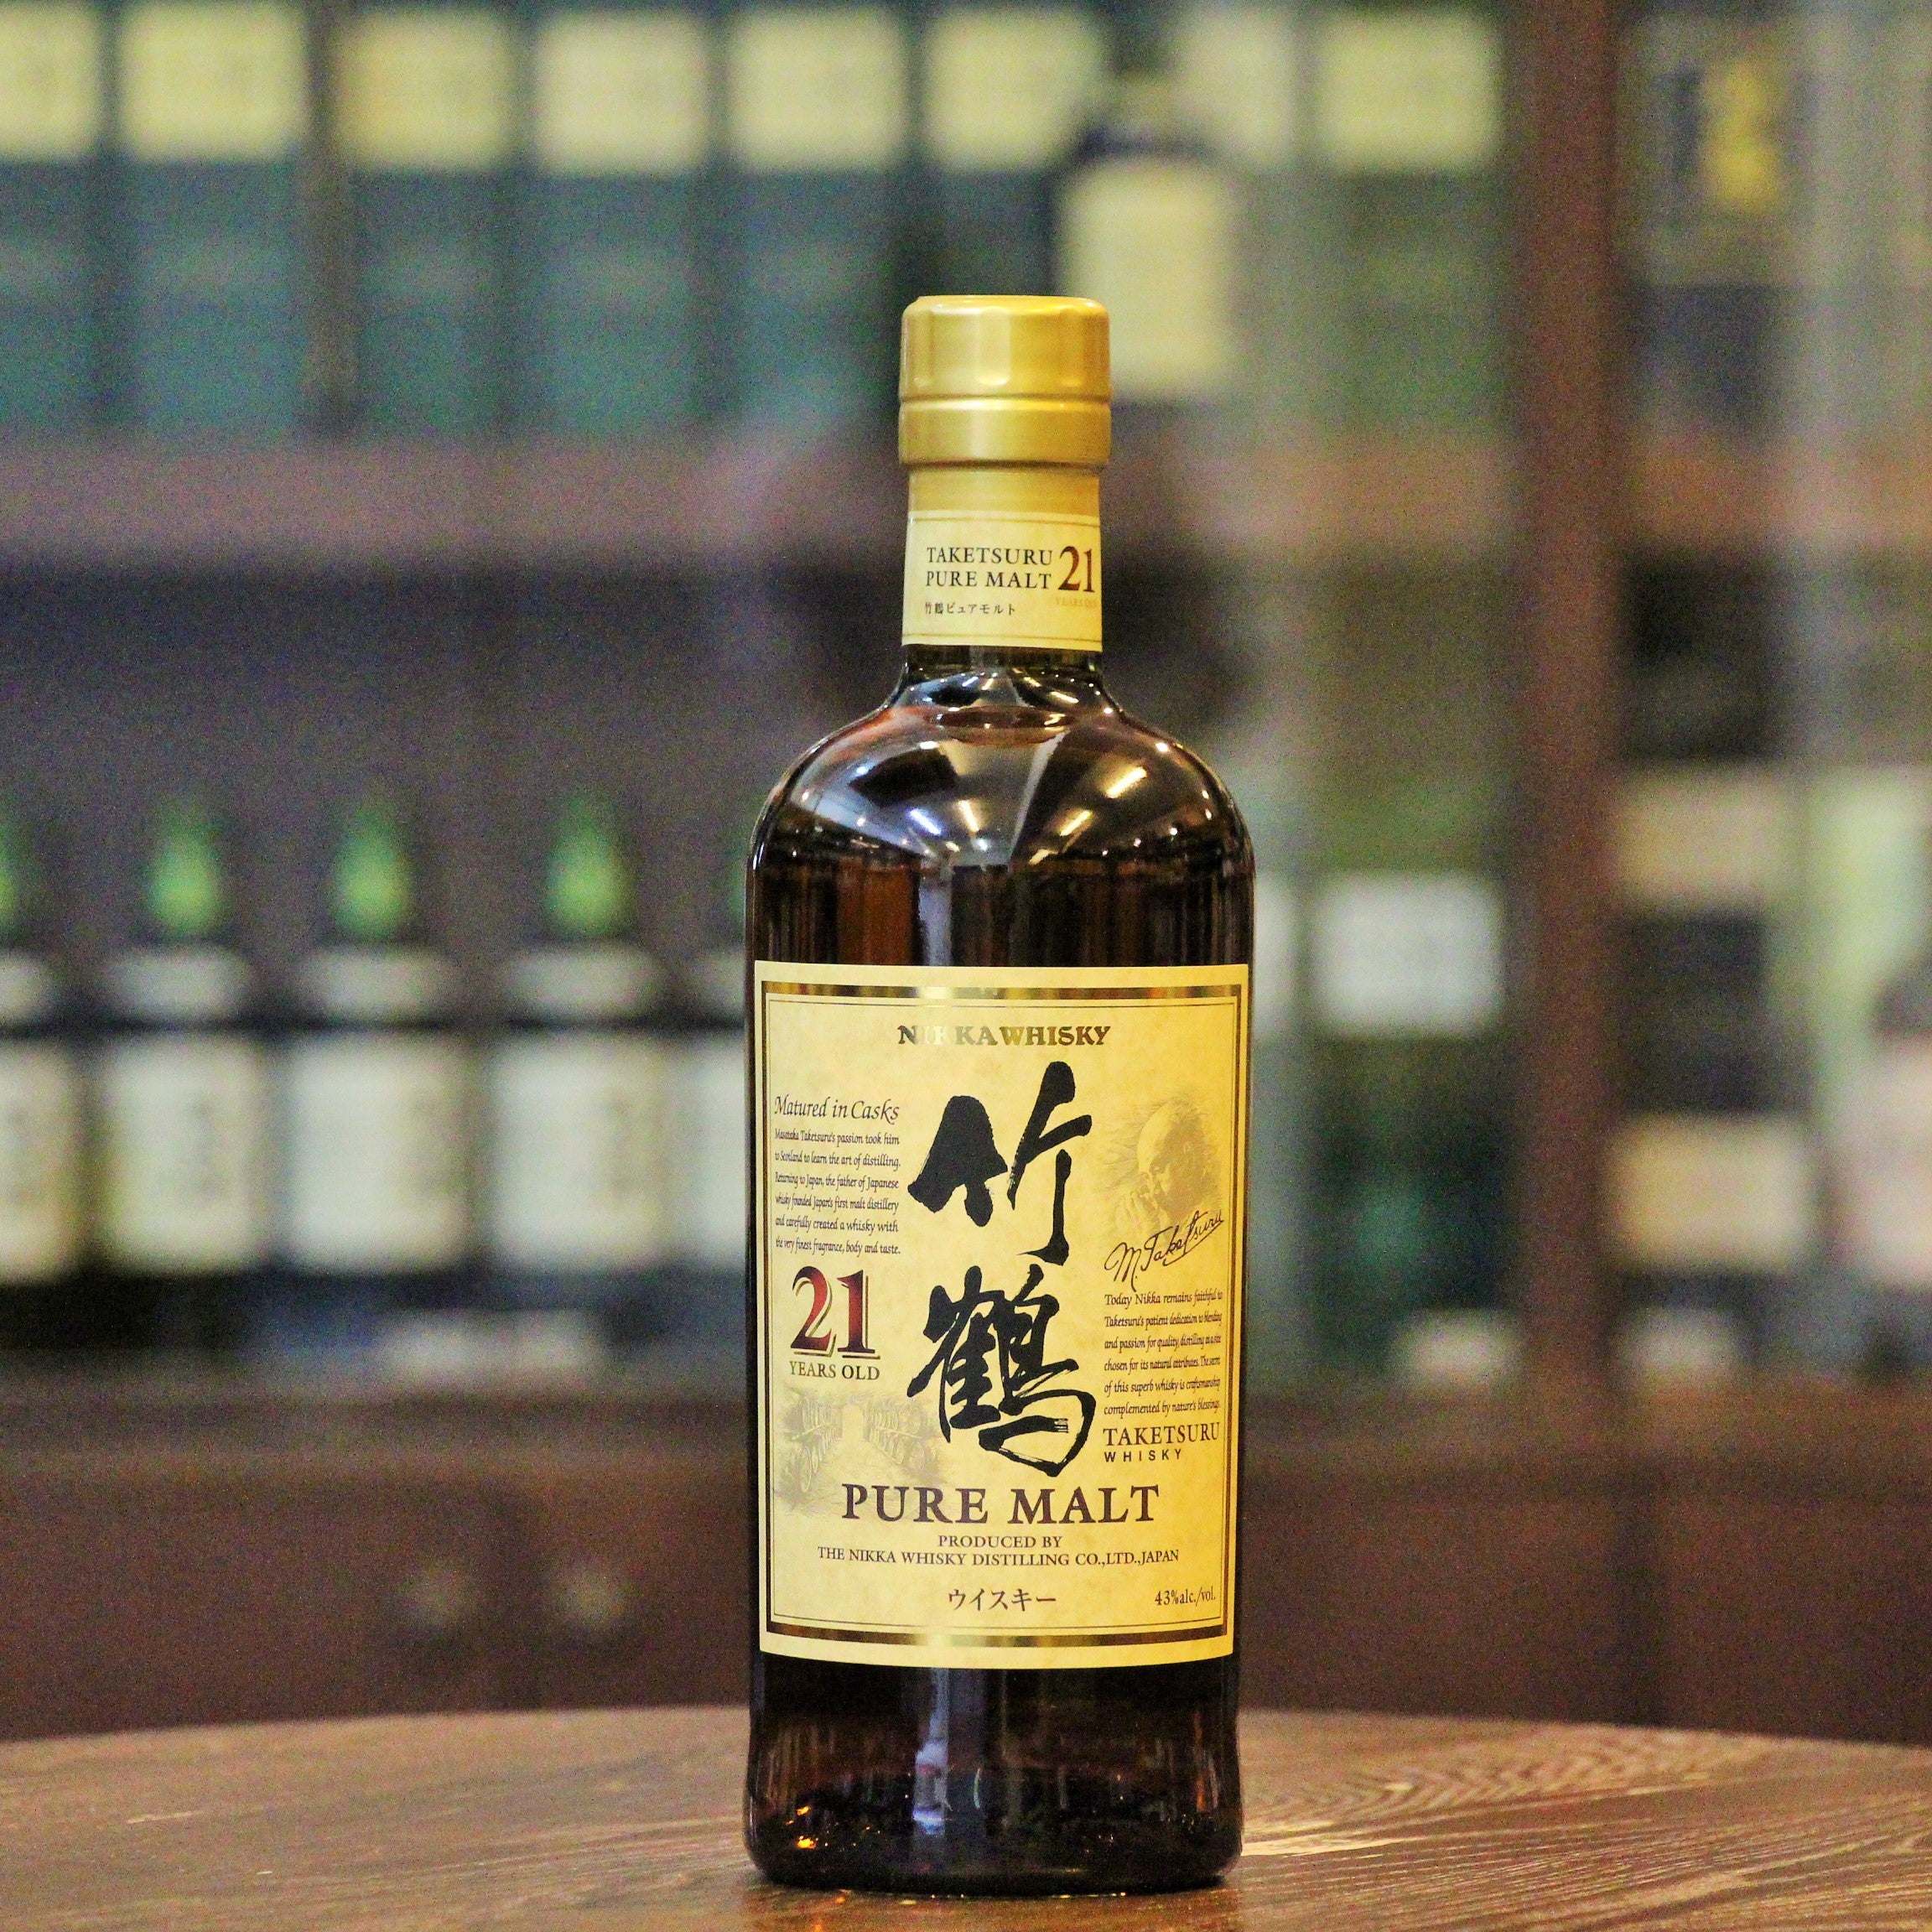 Nikka Taketsuru 21 Years Old Pure Malt Whisky, Highly acclaimed/award winning whisky (World's Best Blended Malt Whisky at 2010 WWA). Named after father of Japanese Whisky Mr Masataka Taketsuru. Sadly Discontinued now.